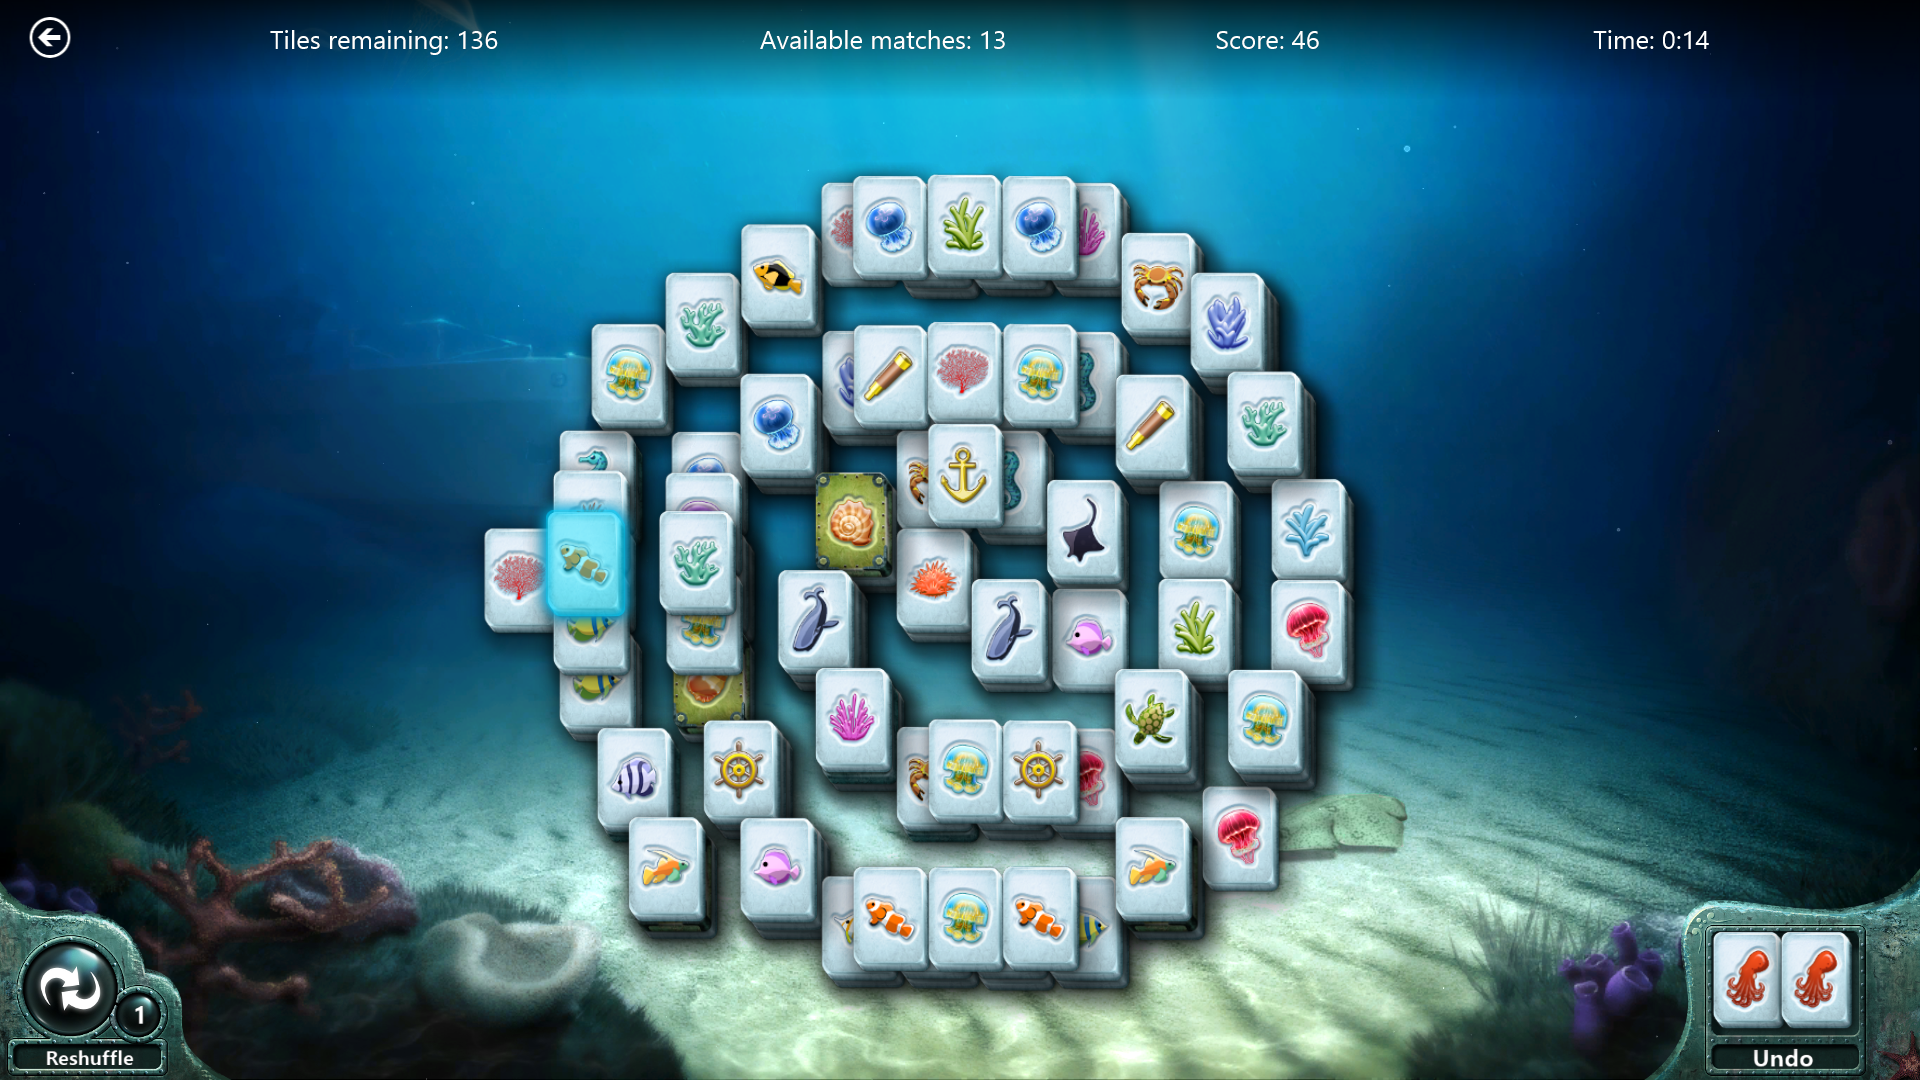 Microsoft Mahjong – Games on Microsoft Store